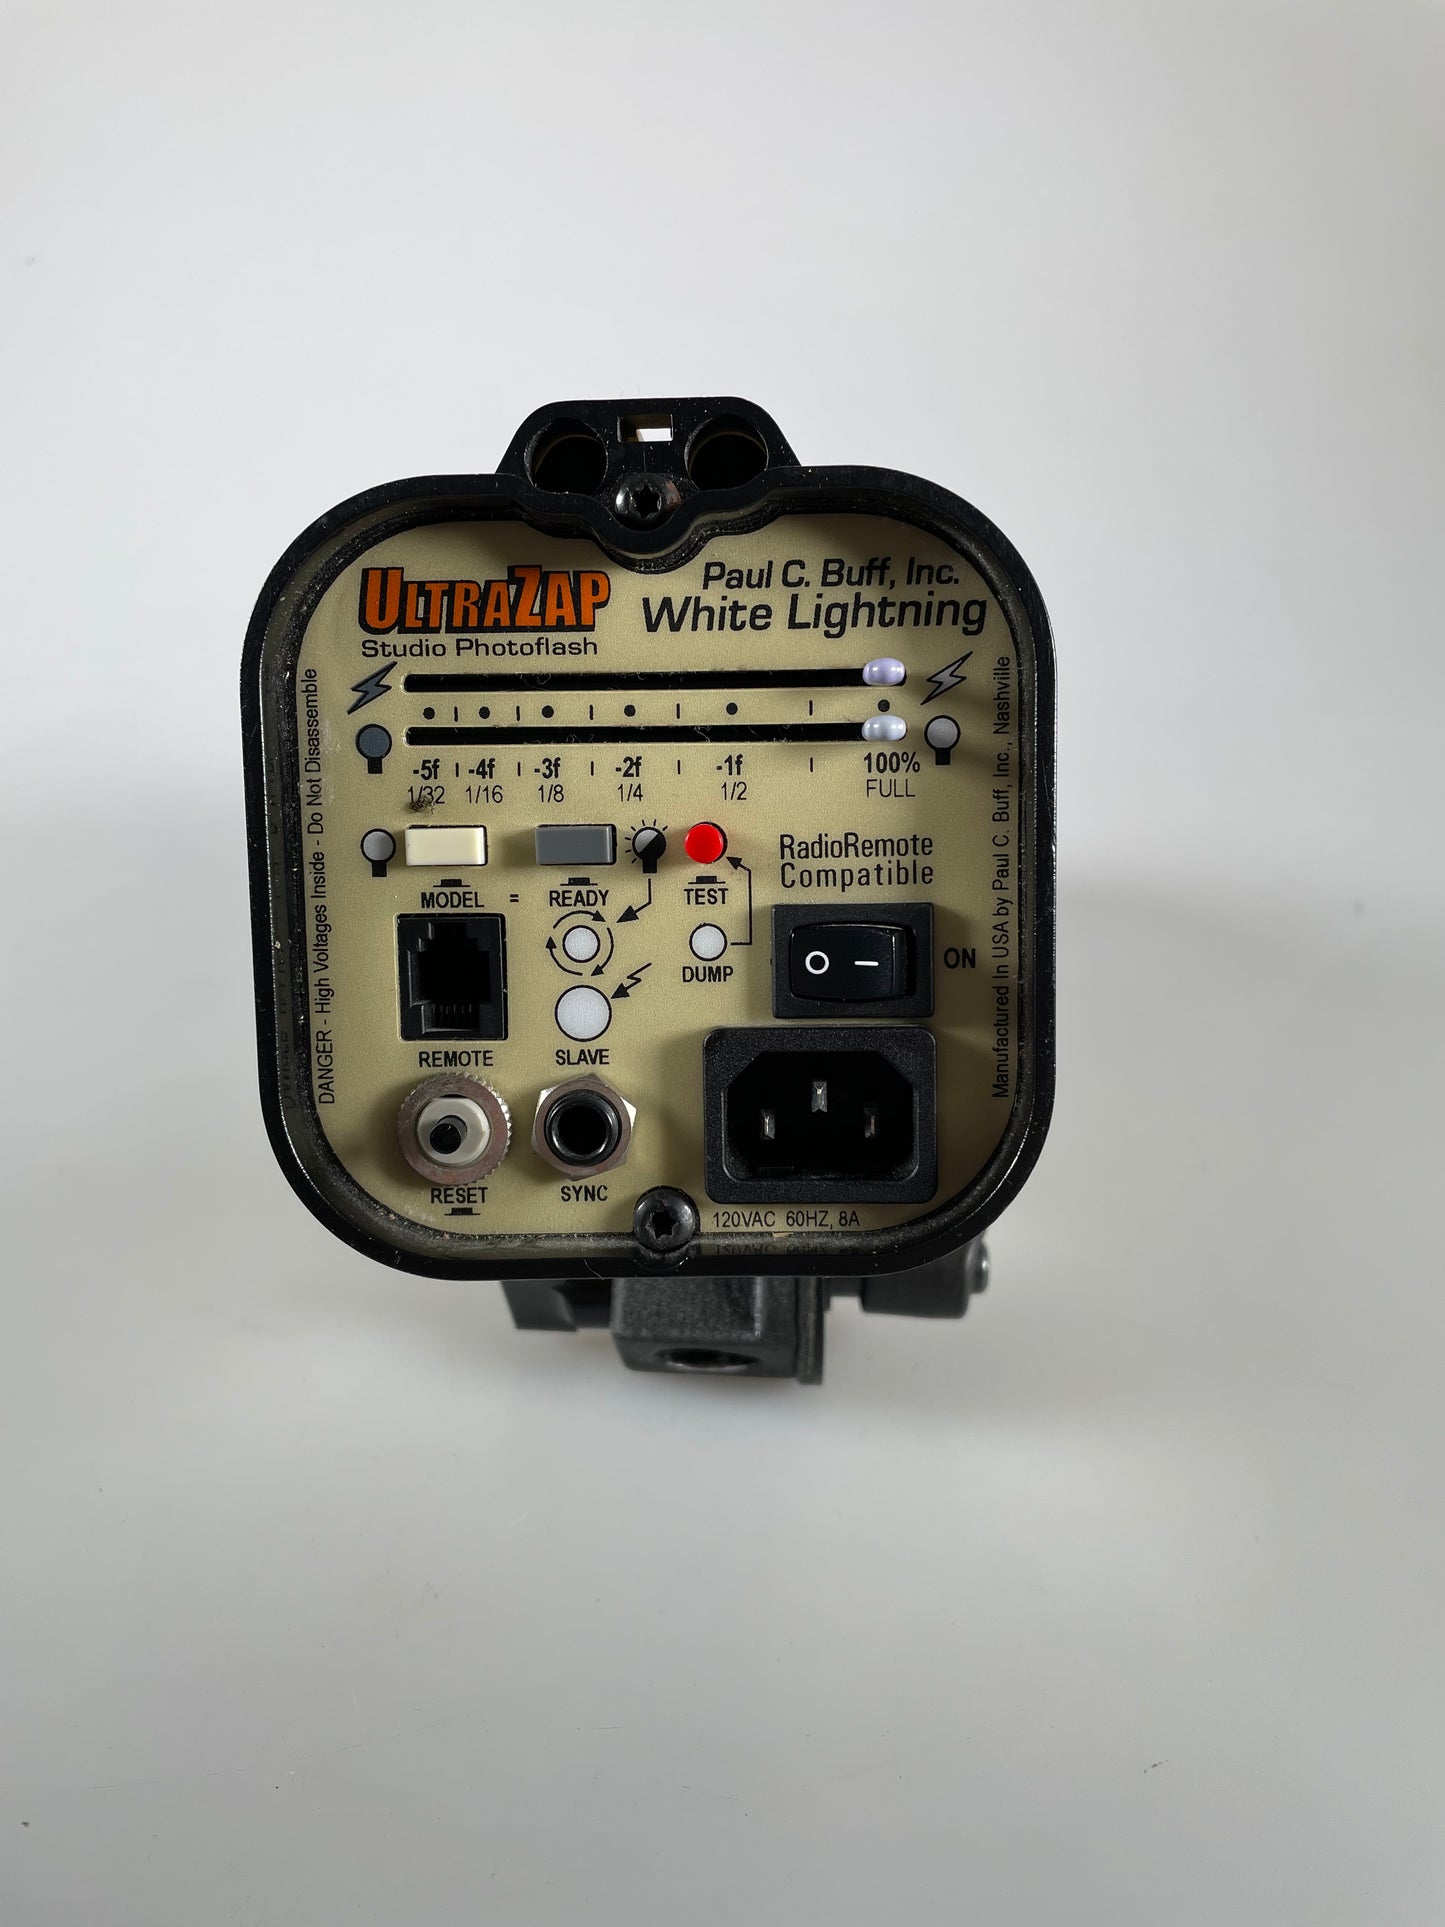 White Lightning UltraZap 800 Paul C Buff Monolight Flash Unit with Cord and Reflector